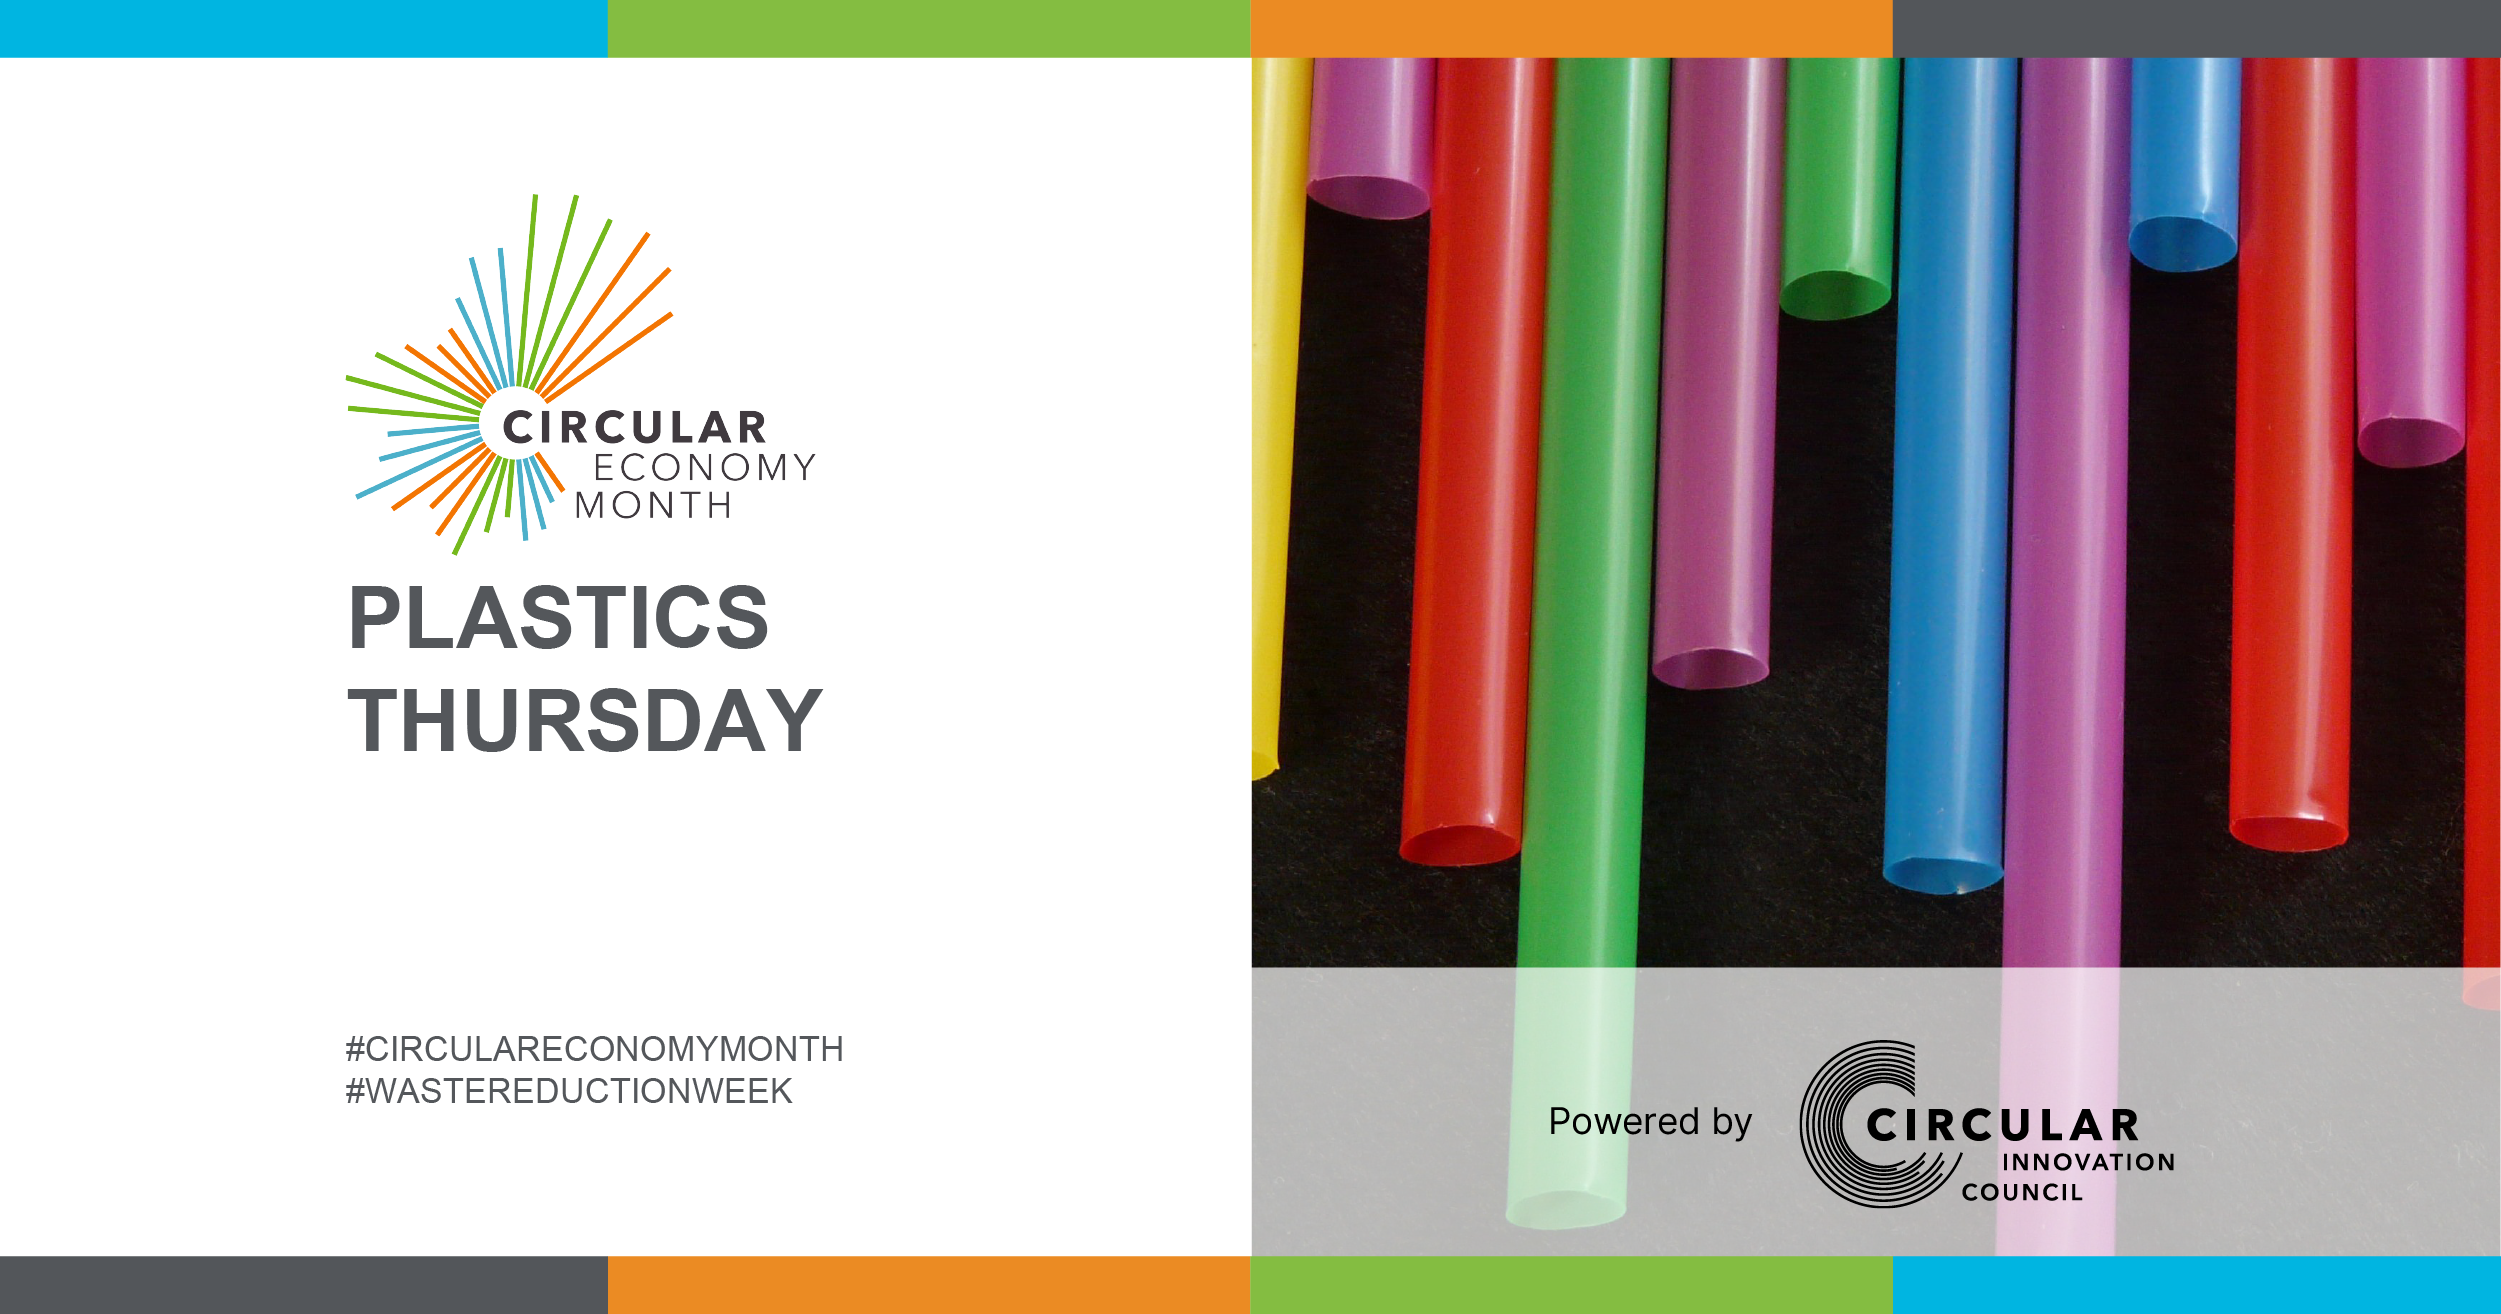 Multicoloured plastic straws. Plastics Thursday. #CircularEconomyMonth #WasteReductionWeek. Circular Economy Month, powered by Circular Innovation Council.